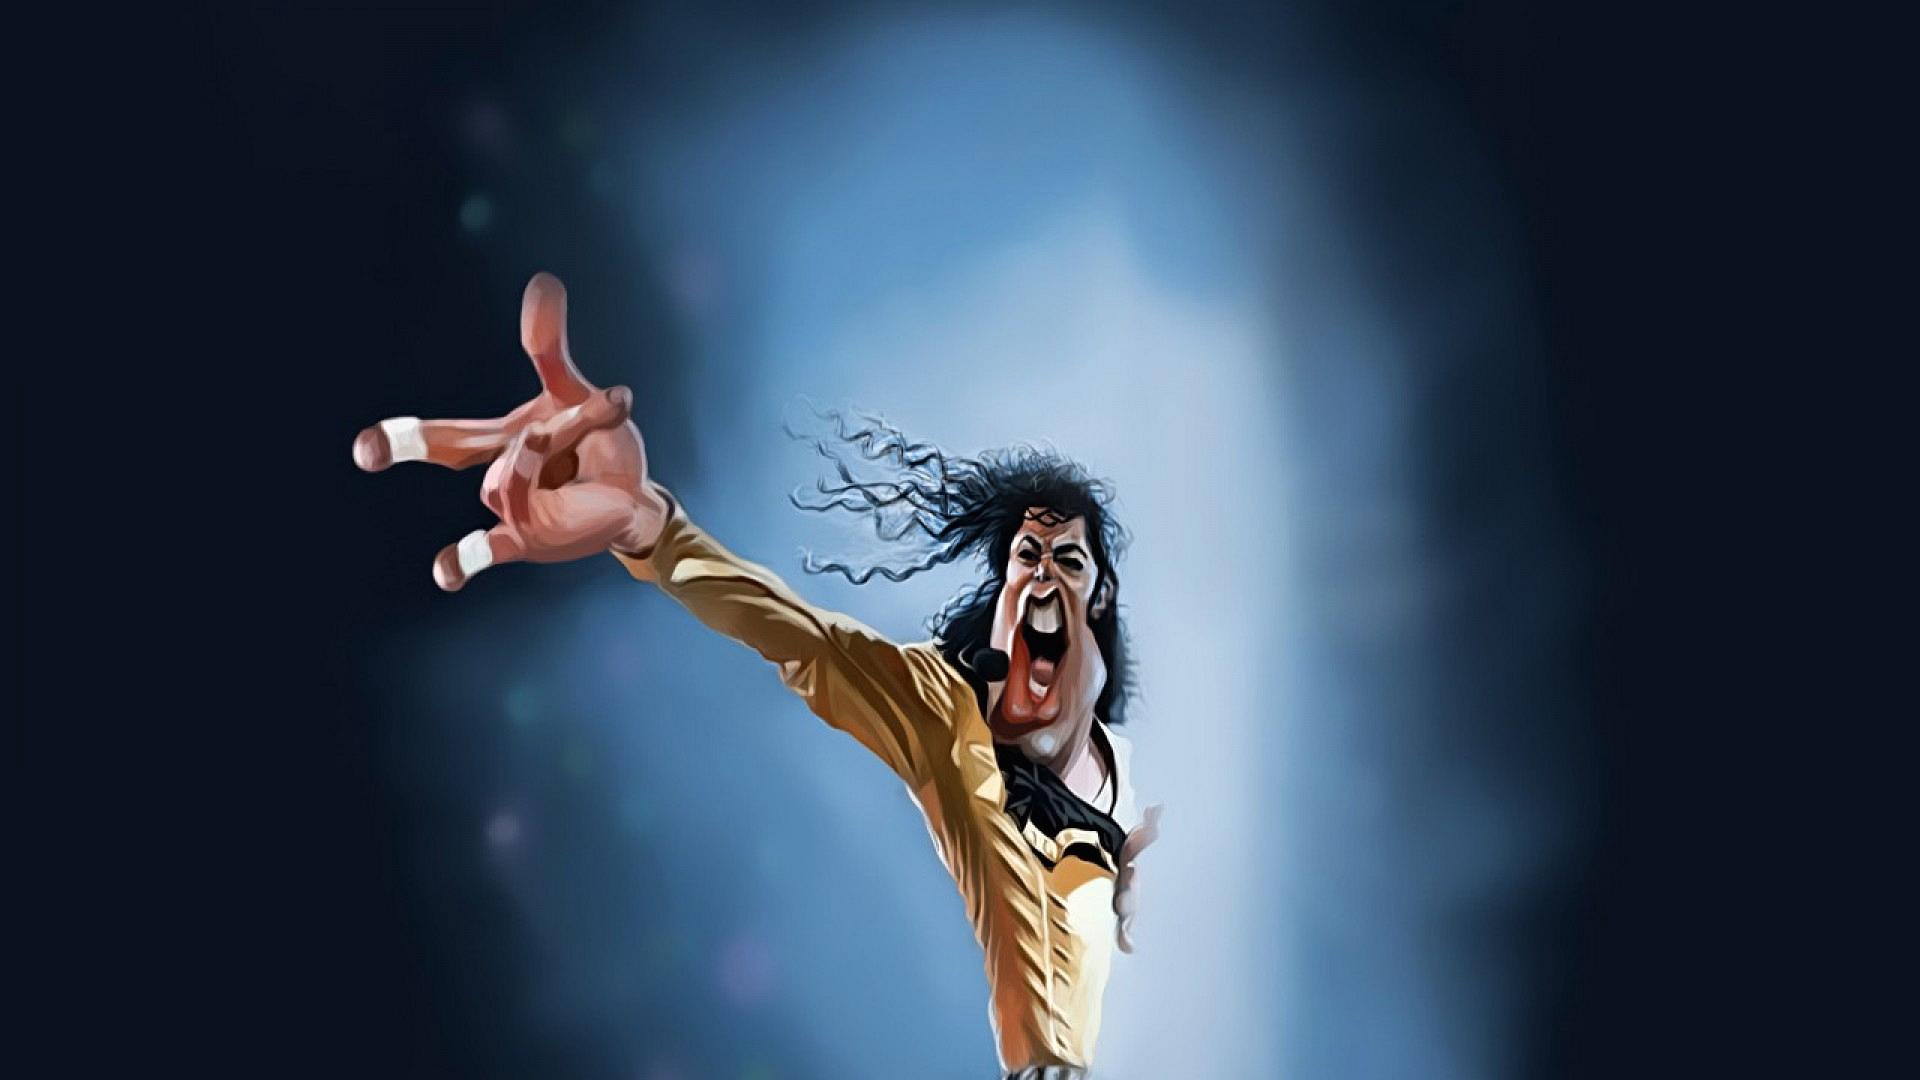 Funny Michael Jackson Caricature Image